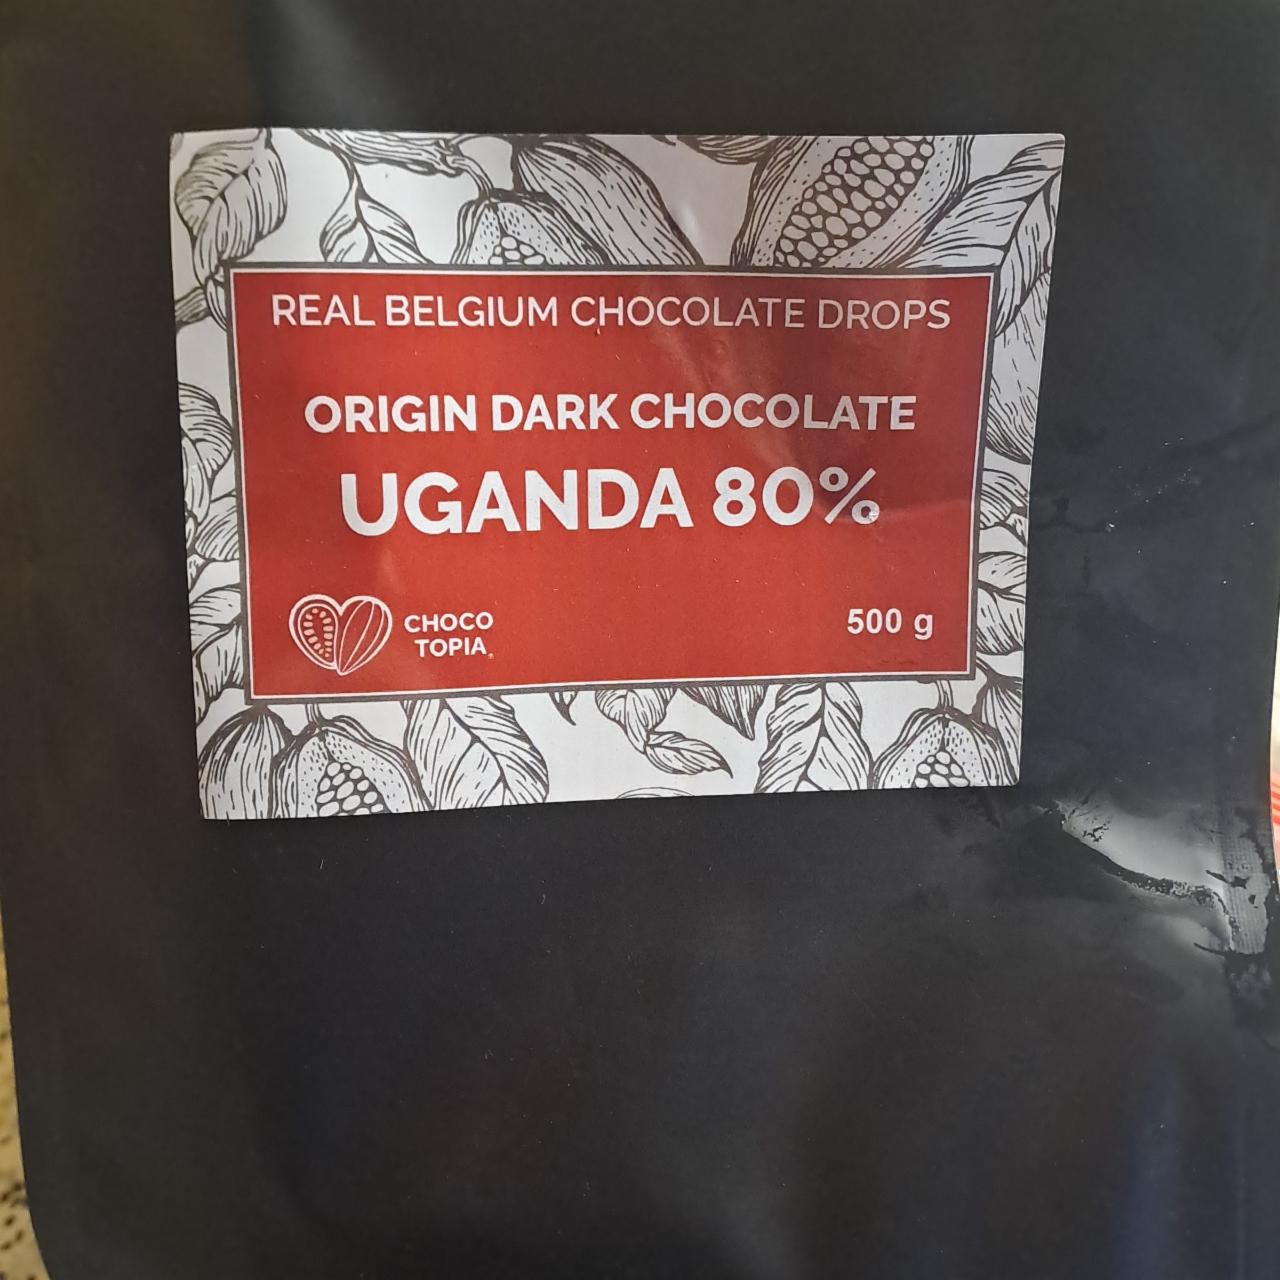 Fotografie - Real Belgium Chocolate drops Origin Dark Chocolate Uganda 80% Chocotopia